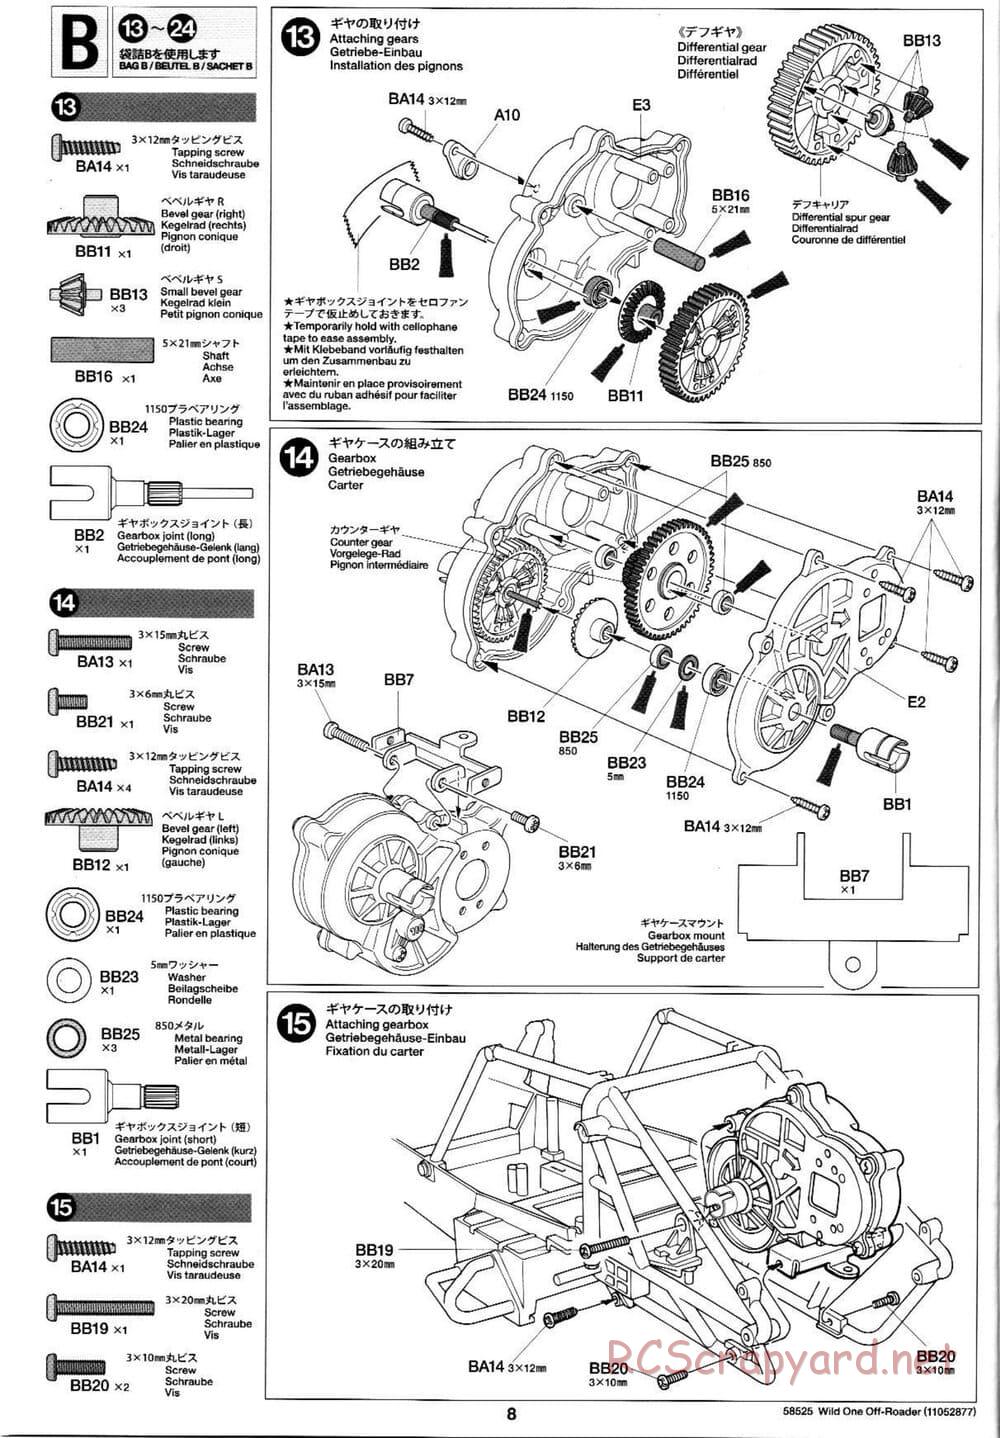 Tamiya - Wild One Off-Roader - FAV Chassis - Manual - Page 8